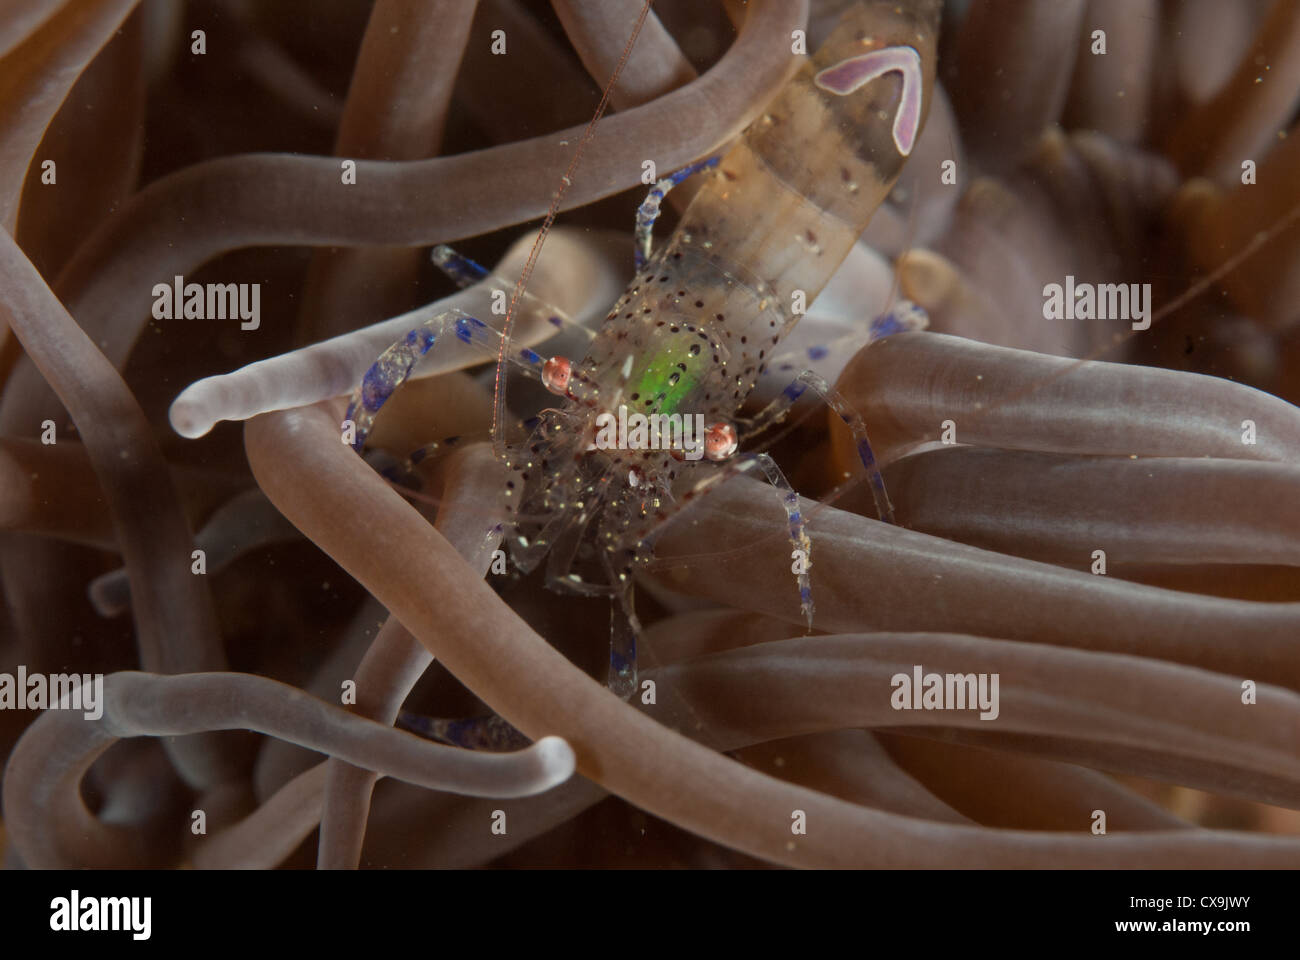 Anemone shrimp ( Periclimenes sagittifer) in Snakelocks anemone. Stock Photo